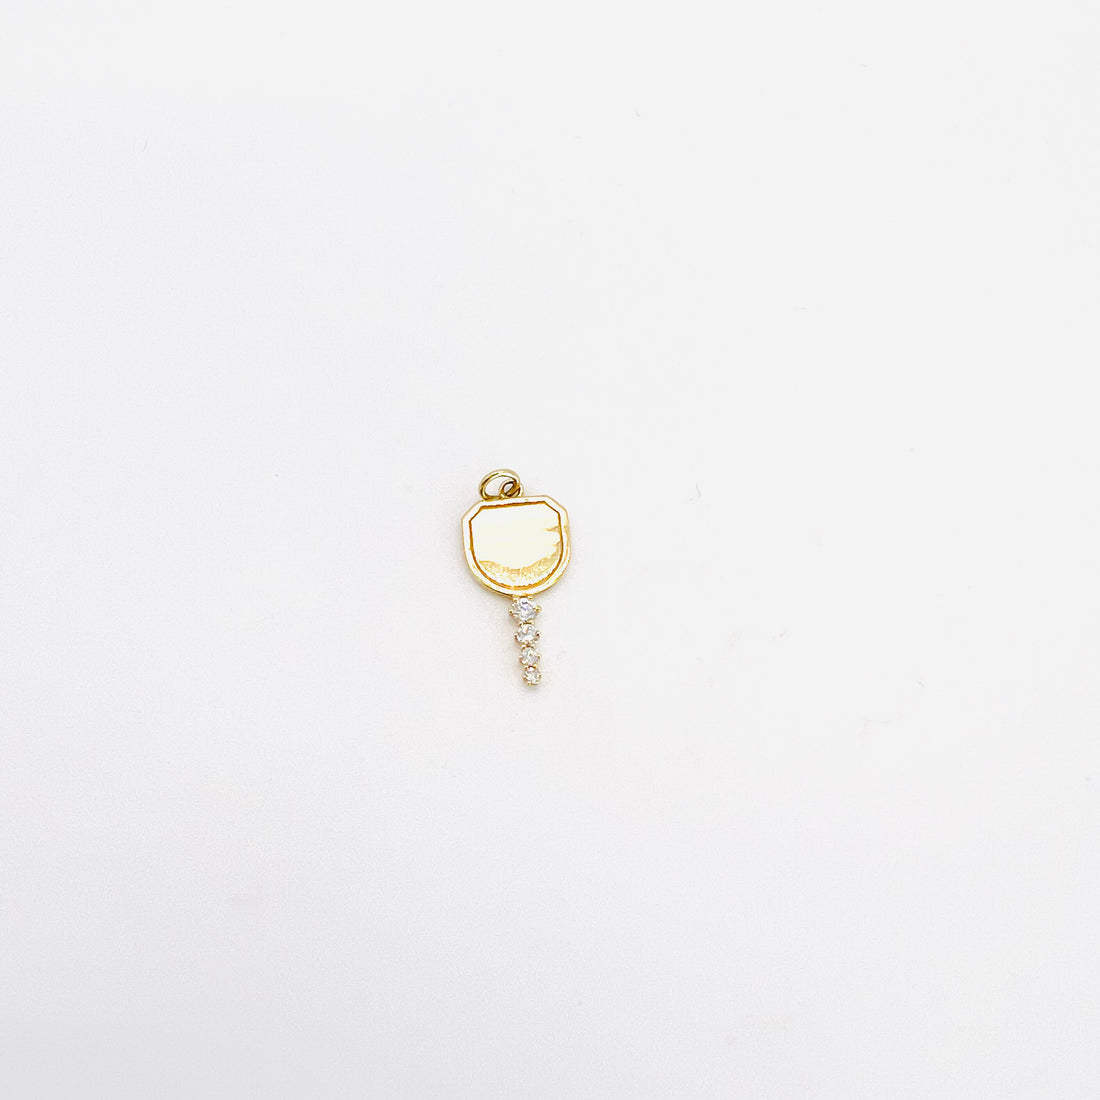 14k gold and diamond key charm